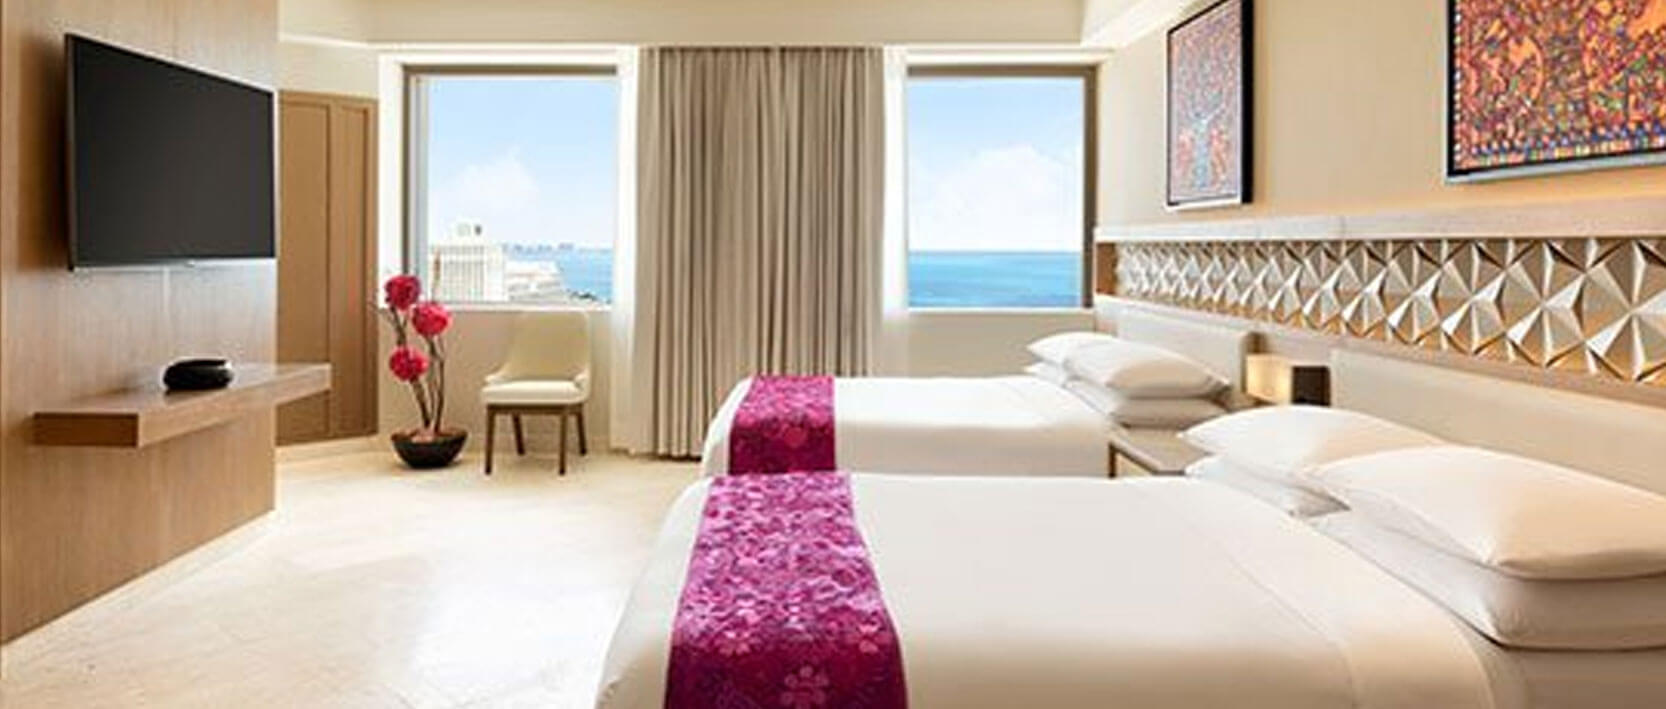 Hyatt Ziva Cancun Accommodations - Presidential Suite